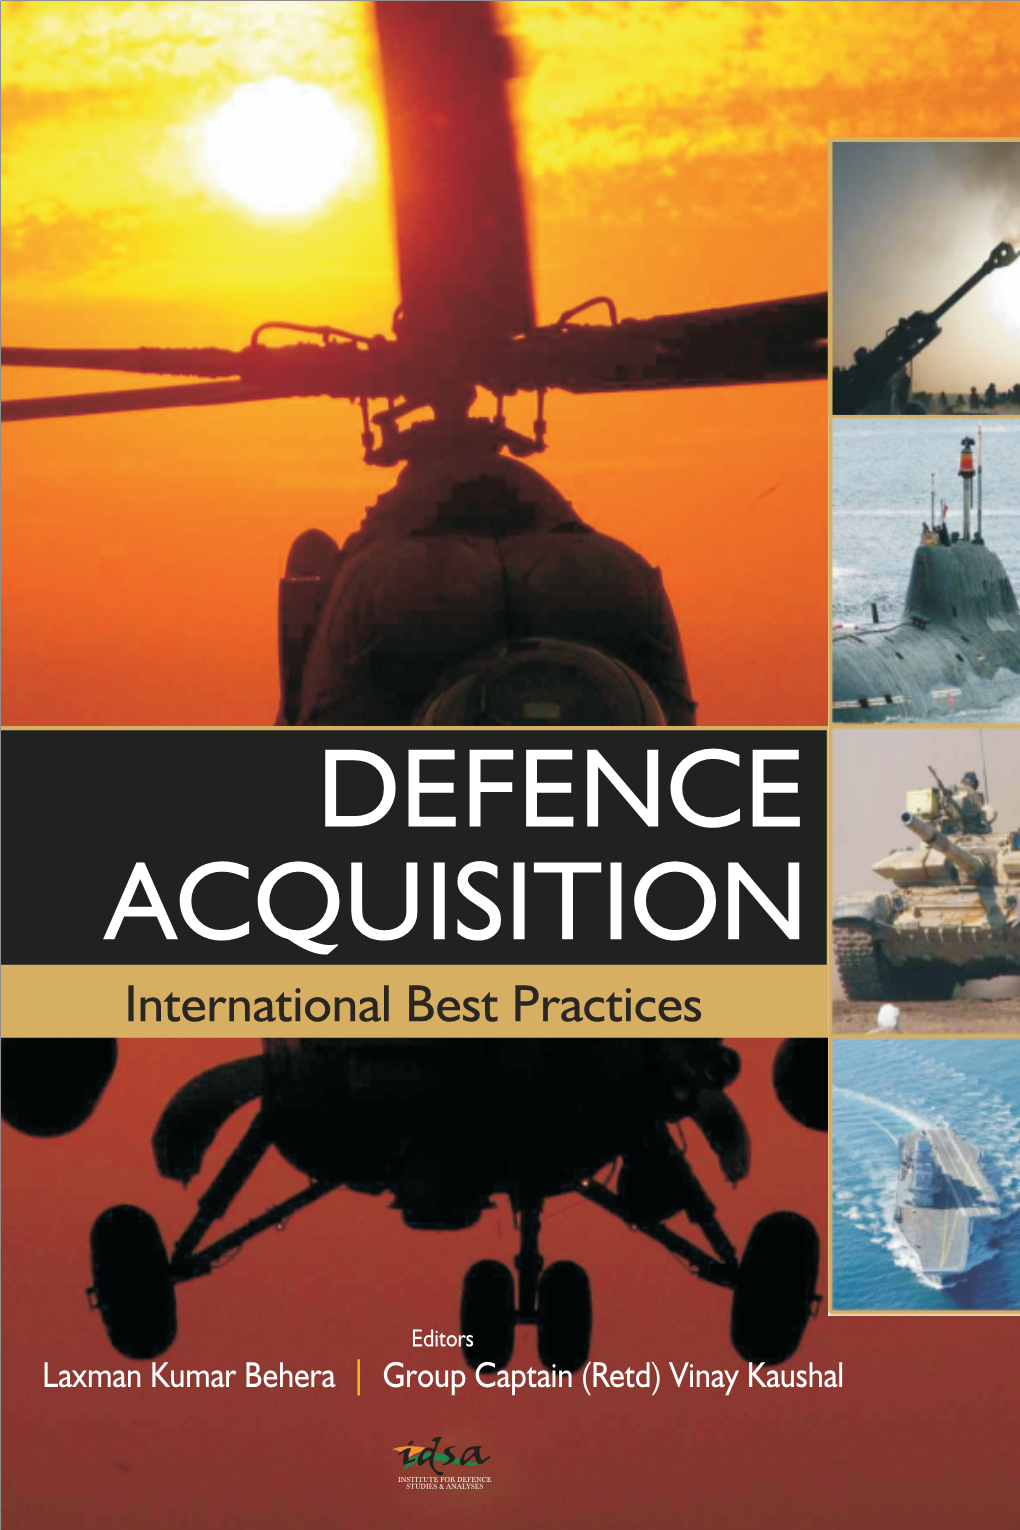 DEFENCE ACQUISITION International Best Practices